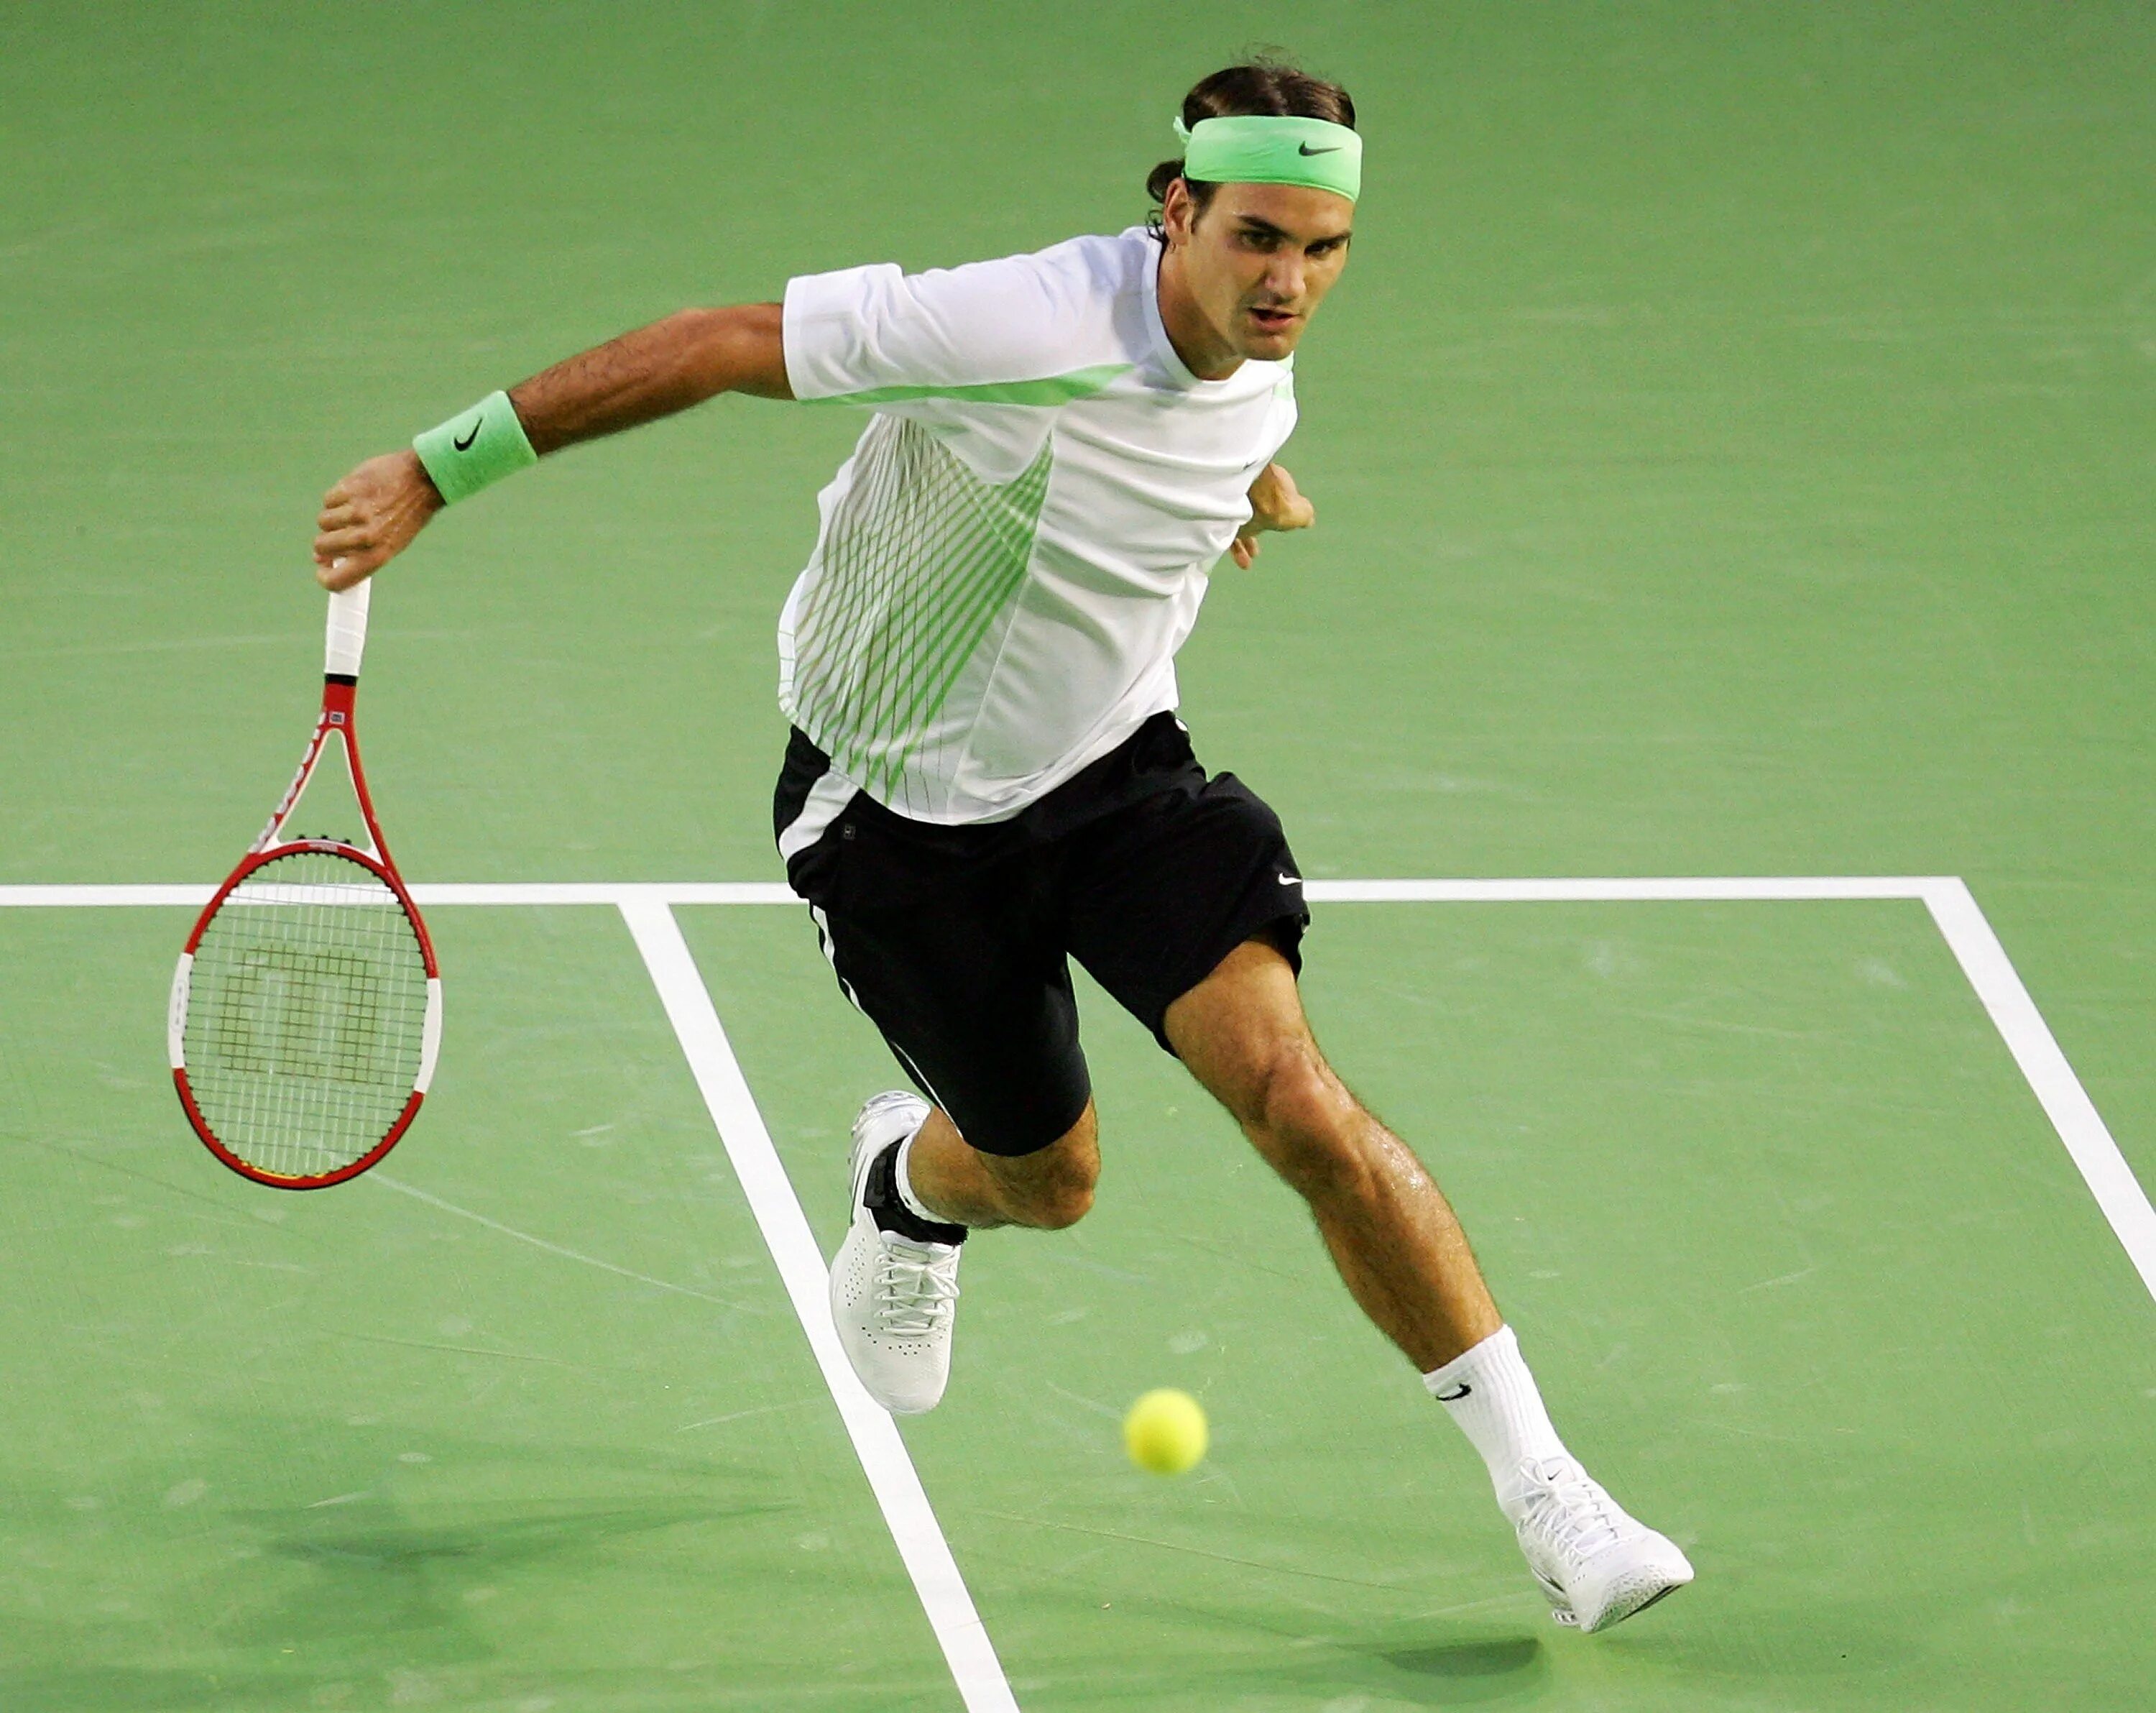 Теннис игроки мужчины. Роджер Федерер. Роджер Федерер на корте. Роджер Федерер с ракеткой.